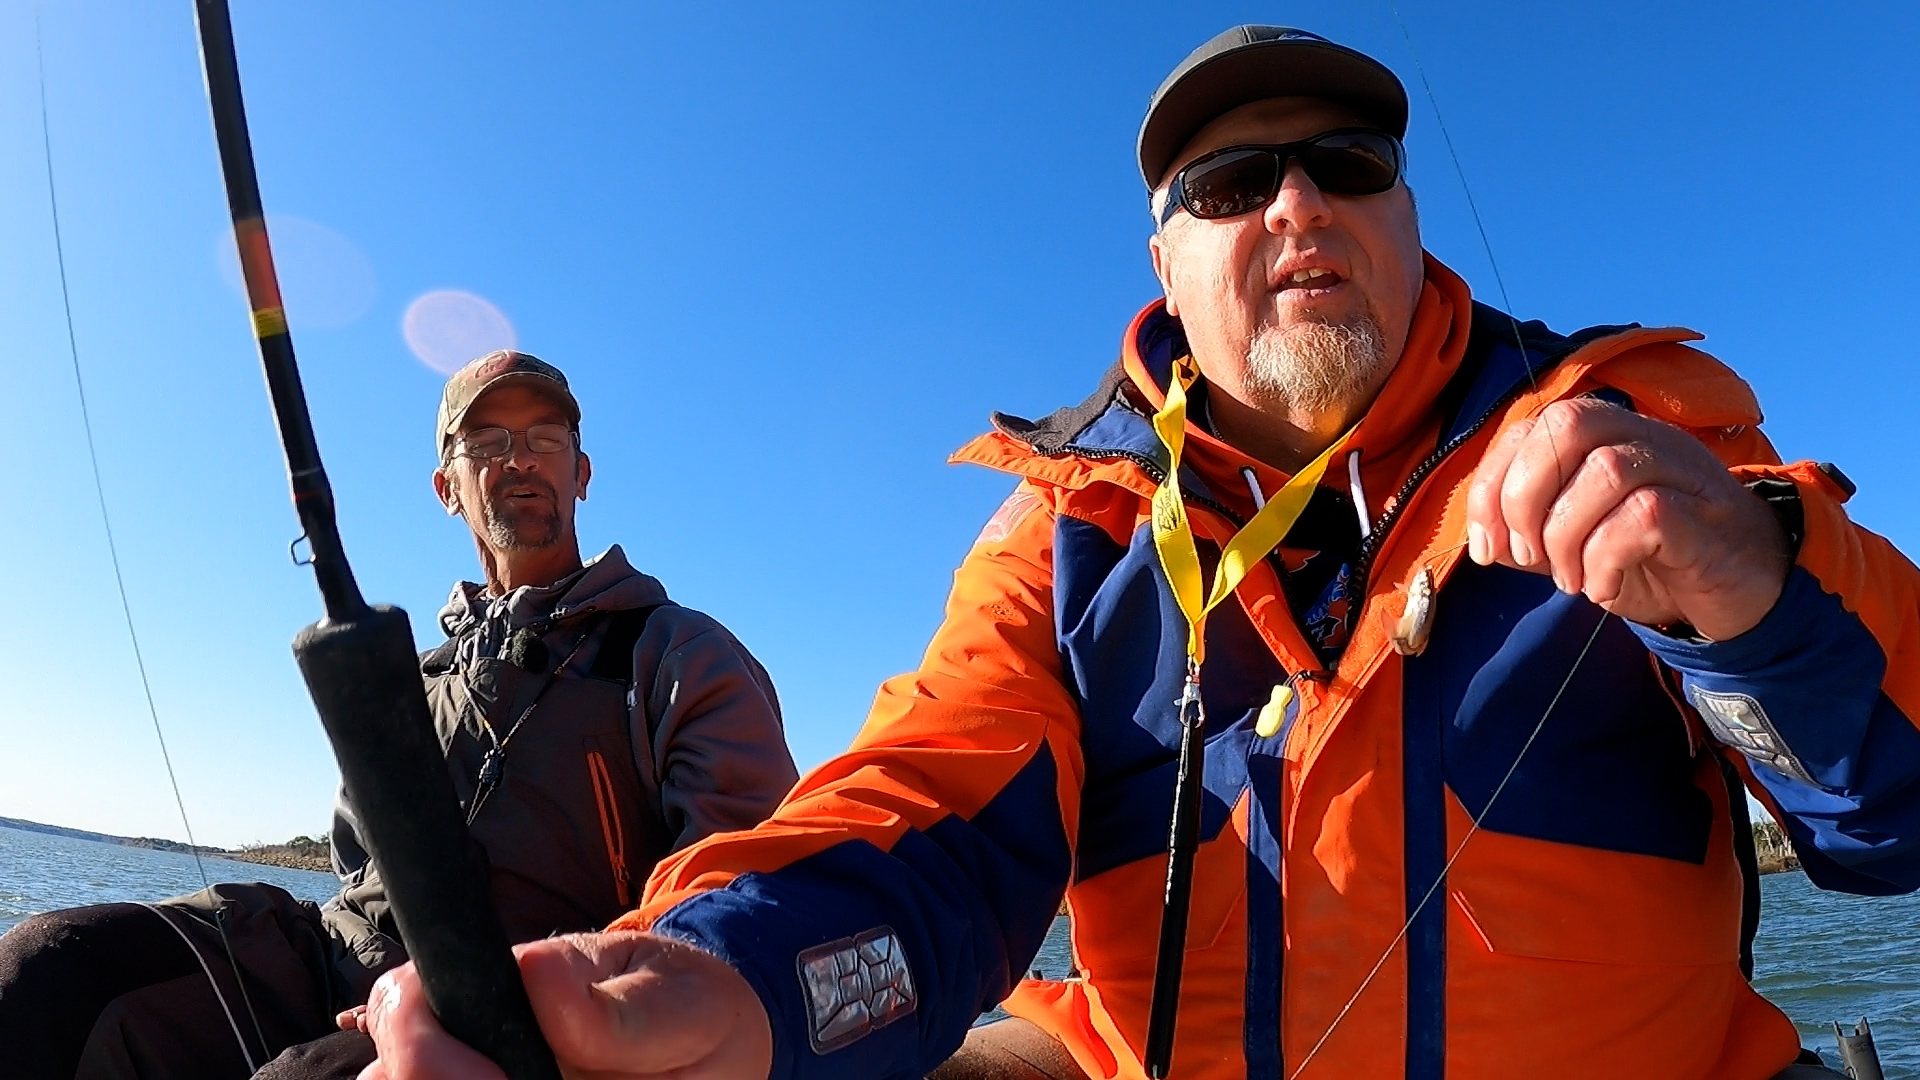 Fishing out on Milford Lake with Joe Bragg | Season 9 Episode 2